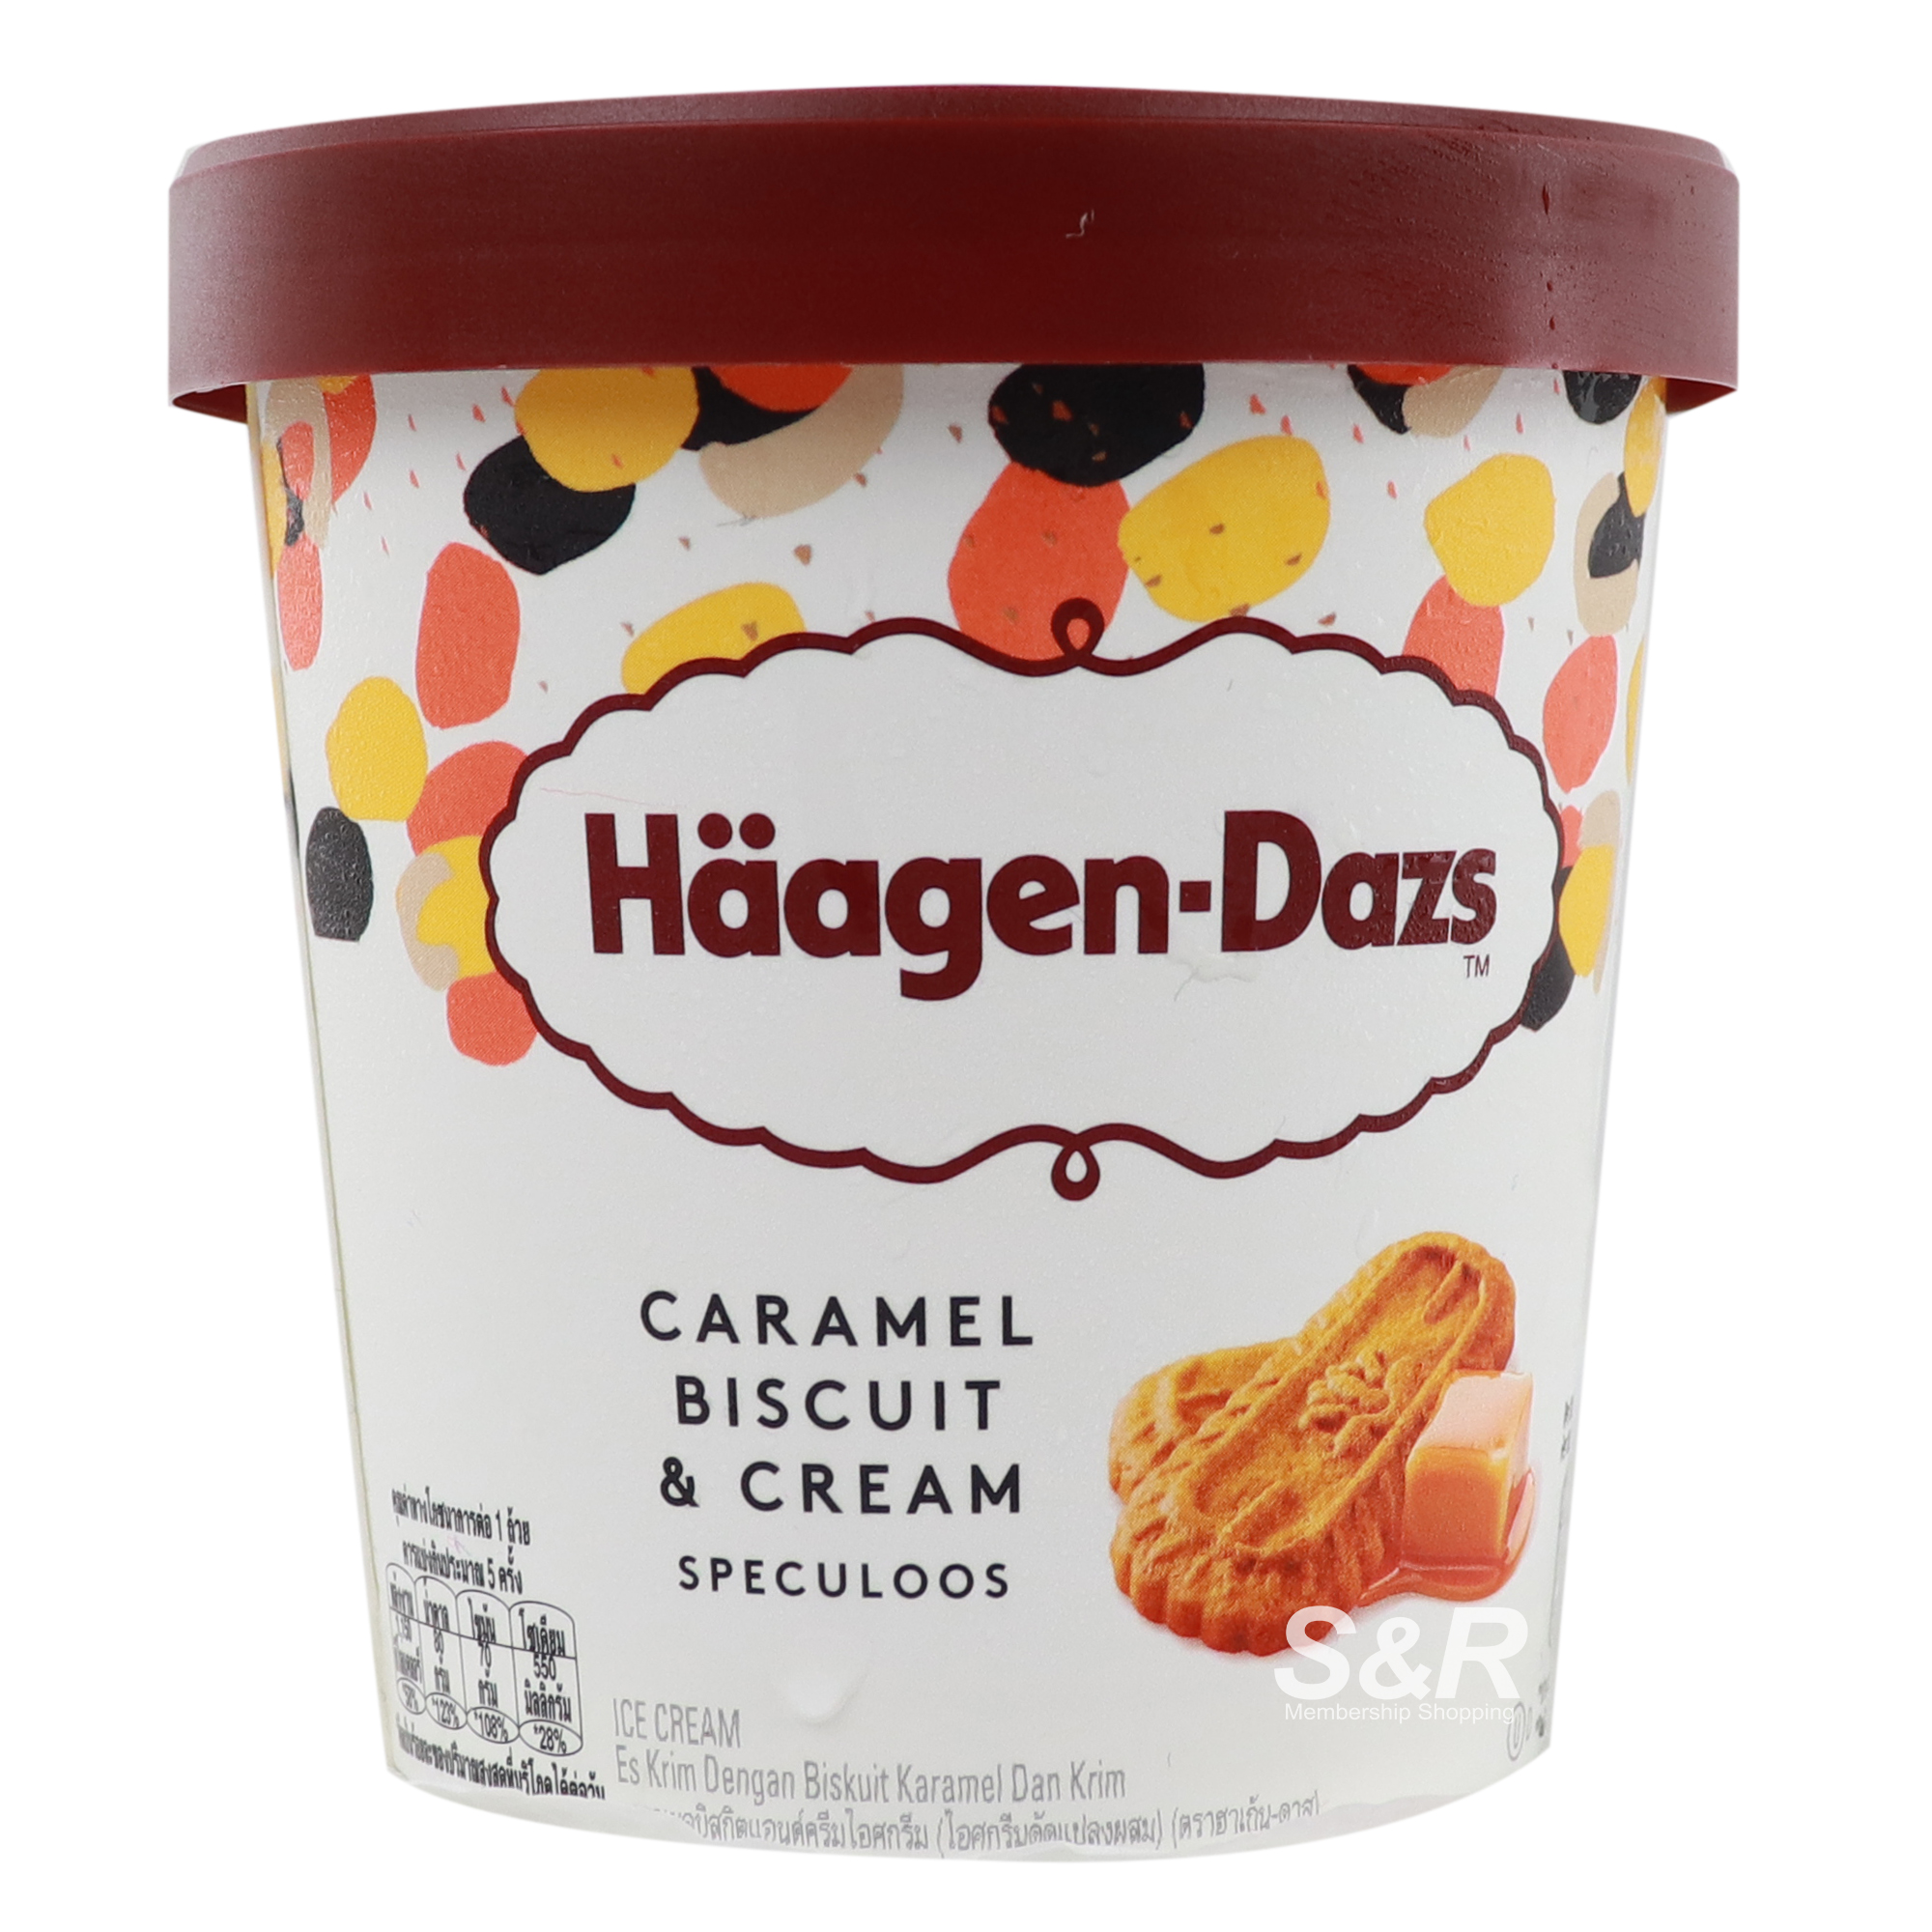 Haagen-Dazs Ice Cream Caramel Biscuit and Cream Speculoos Flavor 473mL